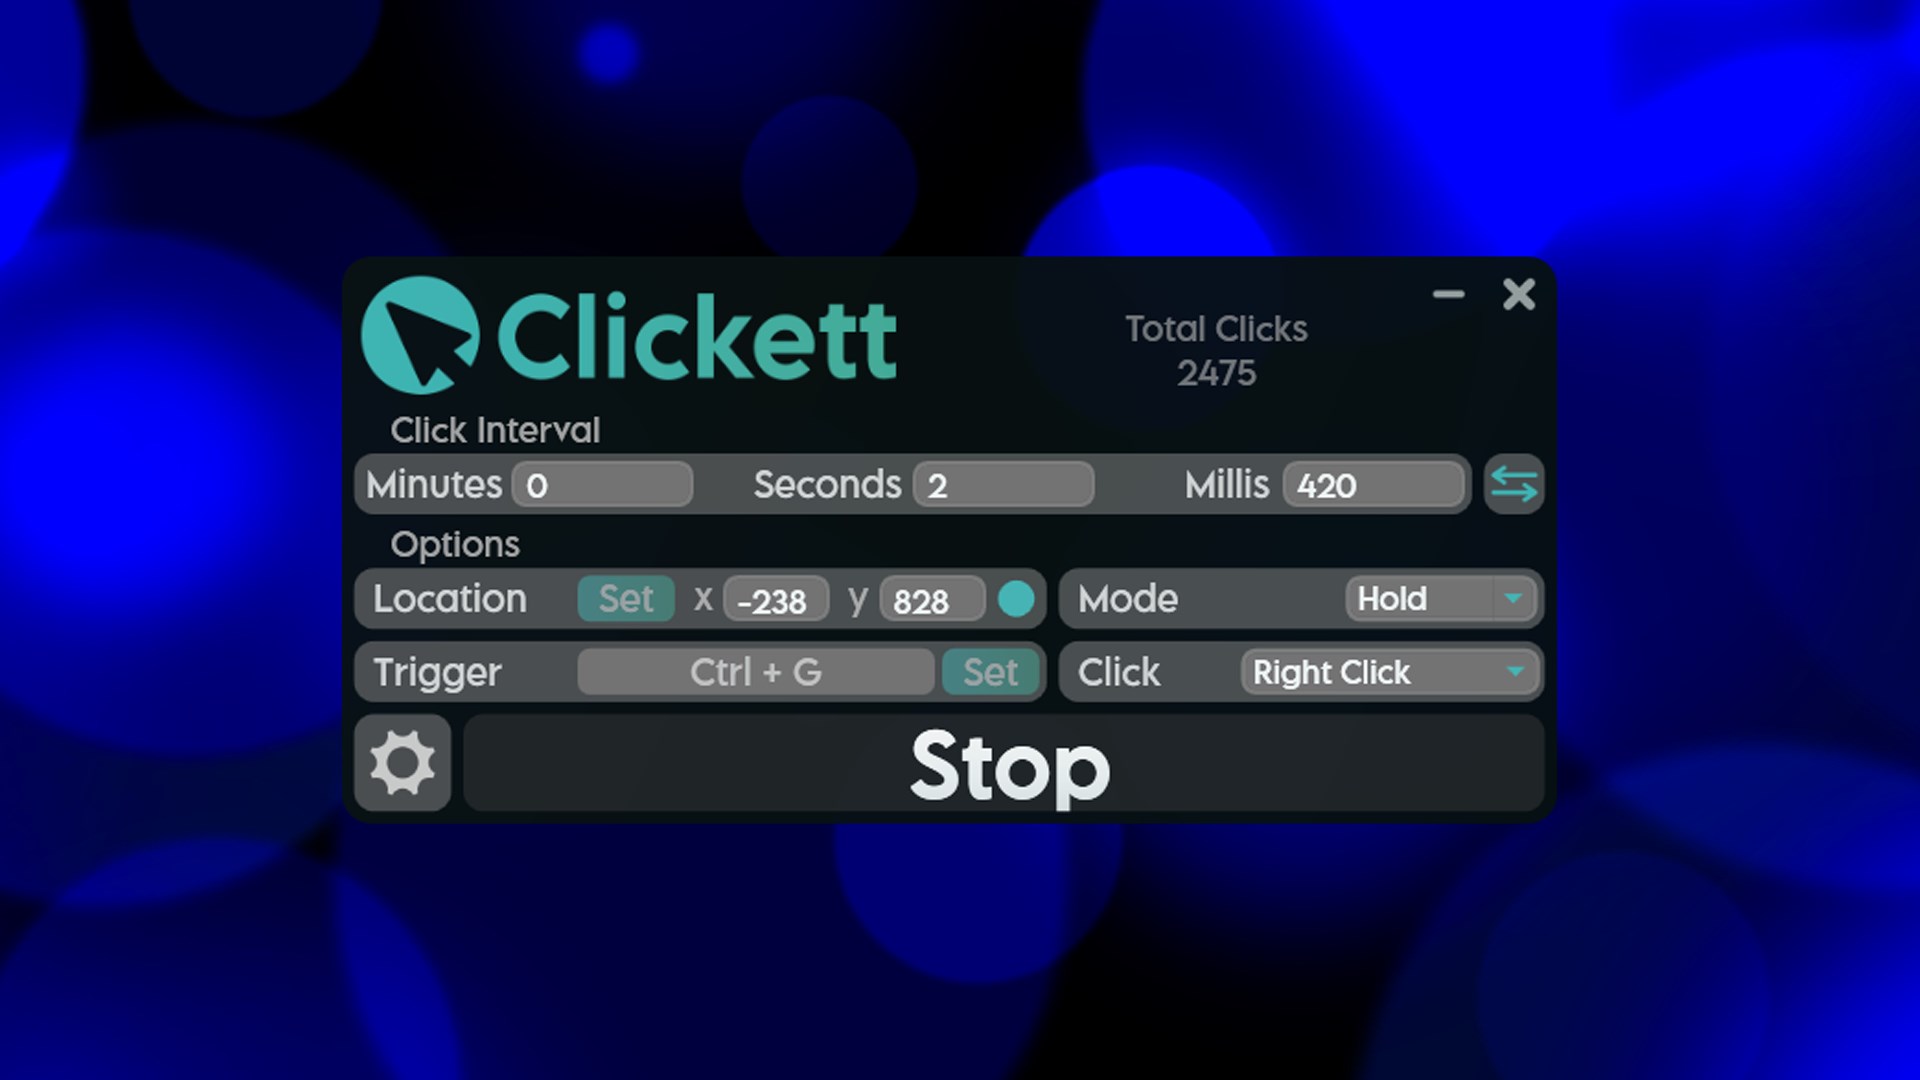 OP Auto Clicker - Microsoft Apps